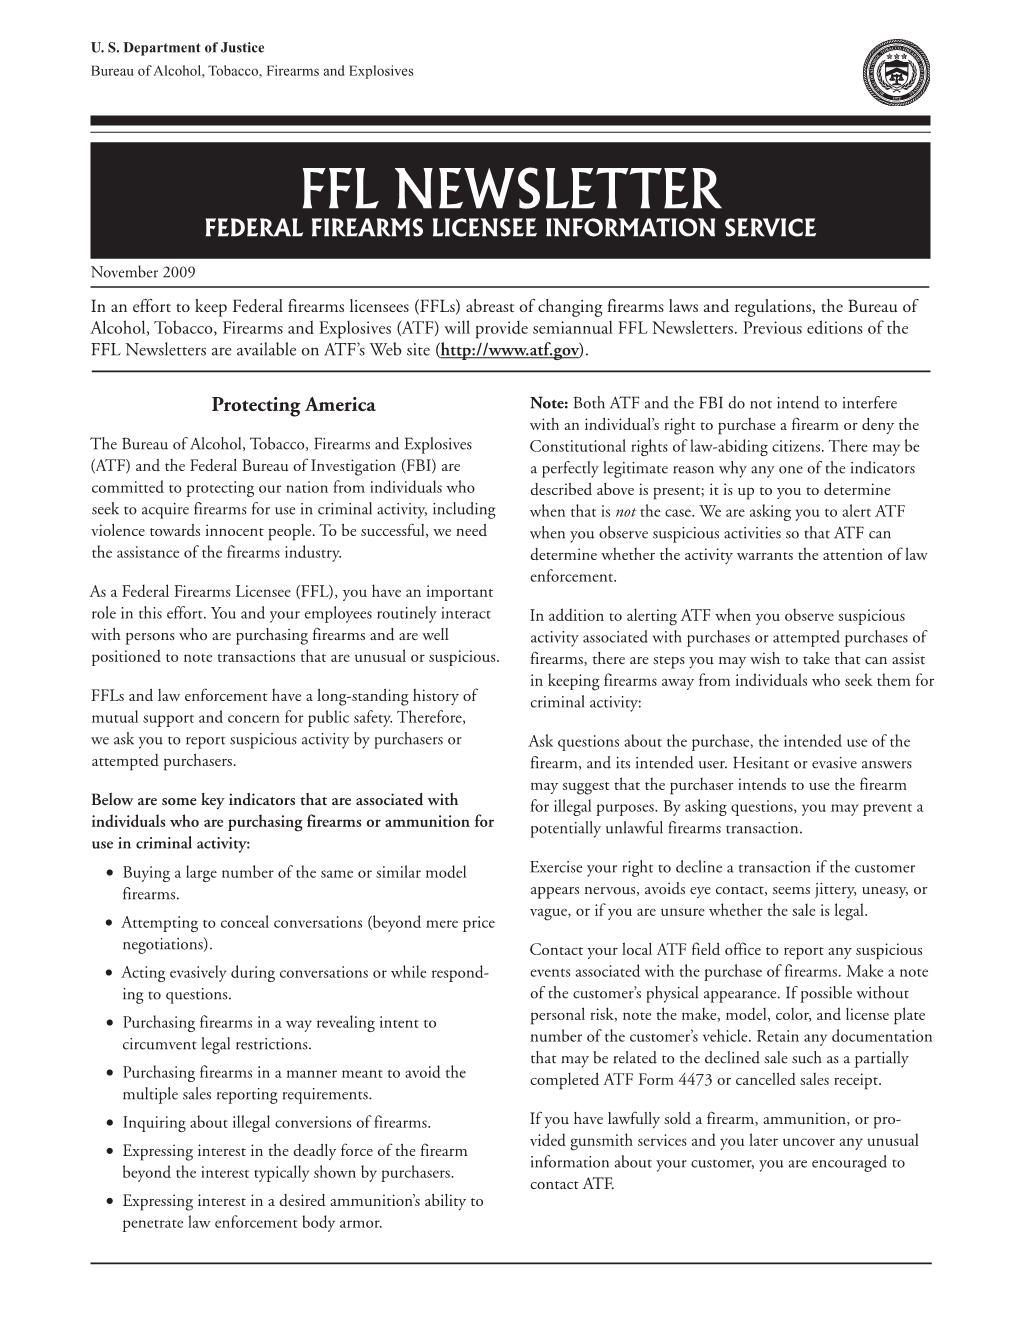 Federal Firearms Licensees Newsletter-November 2009